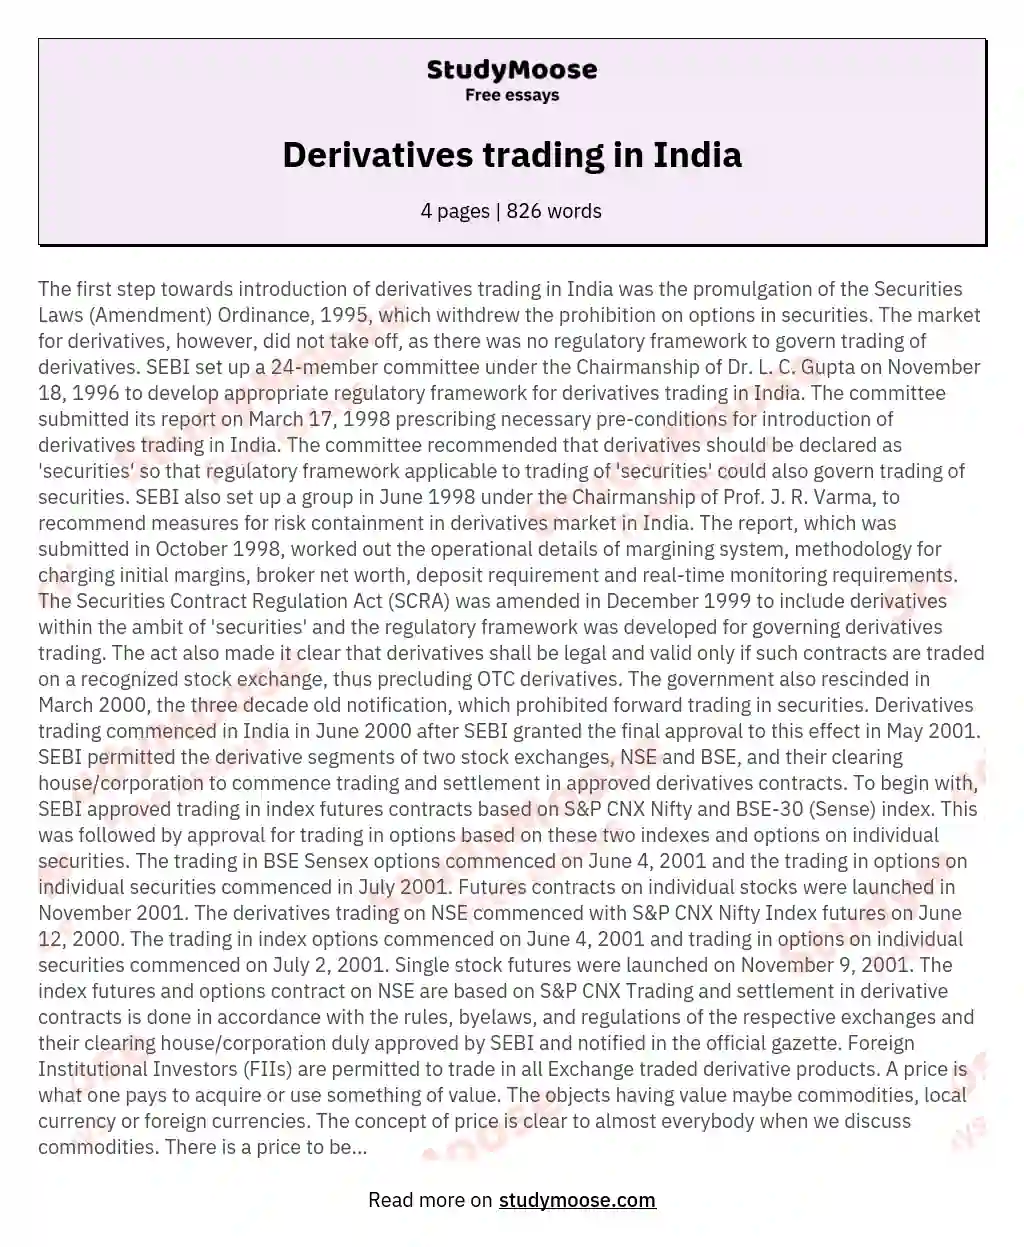 Derivatives trading in India essay